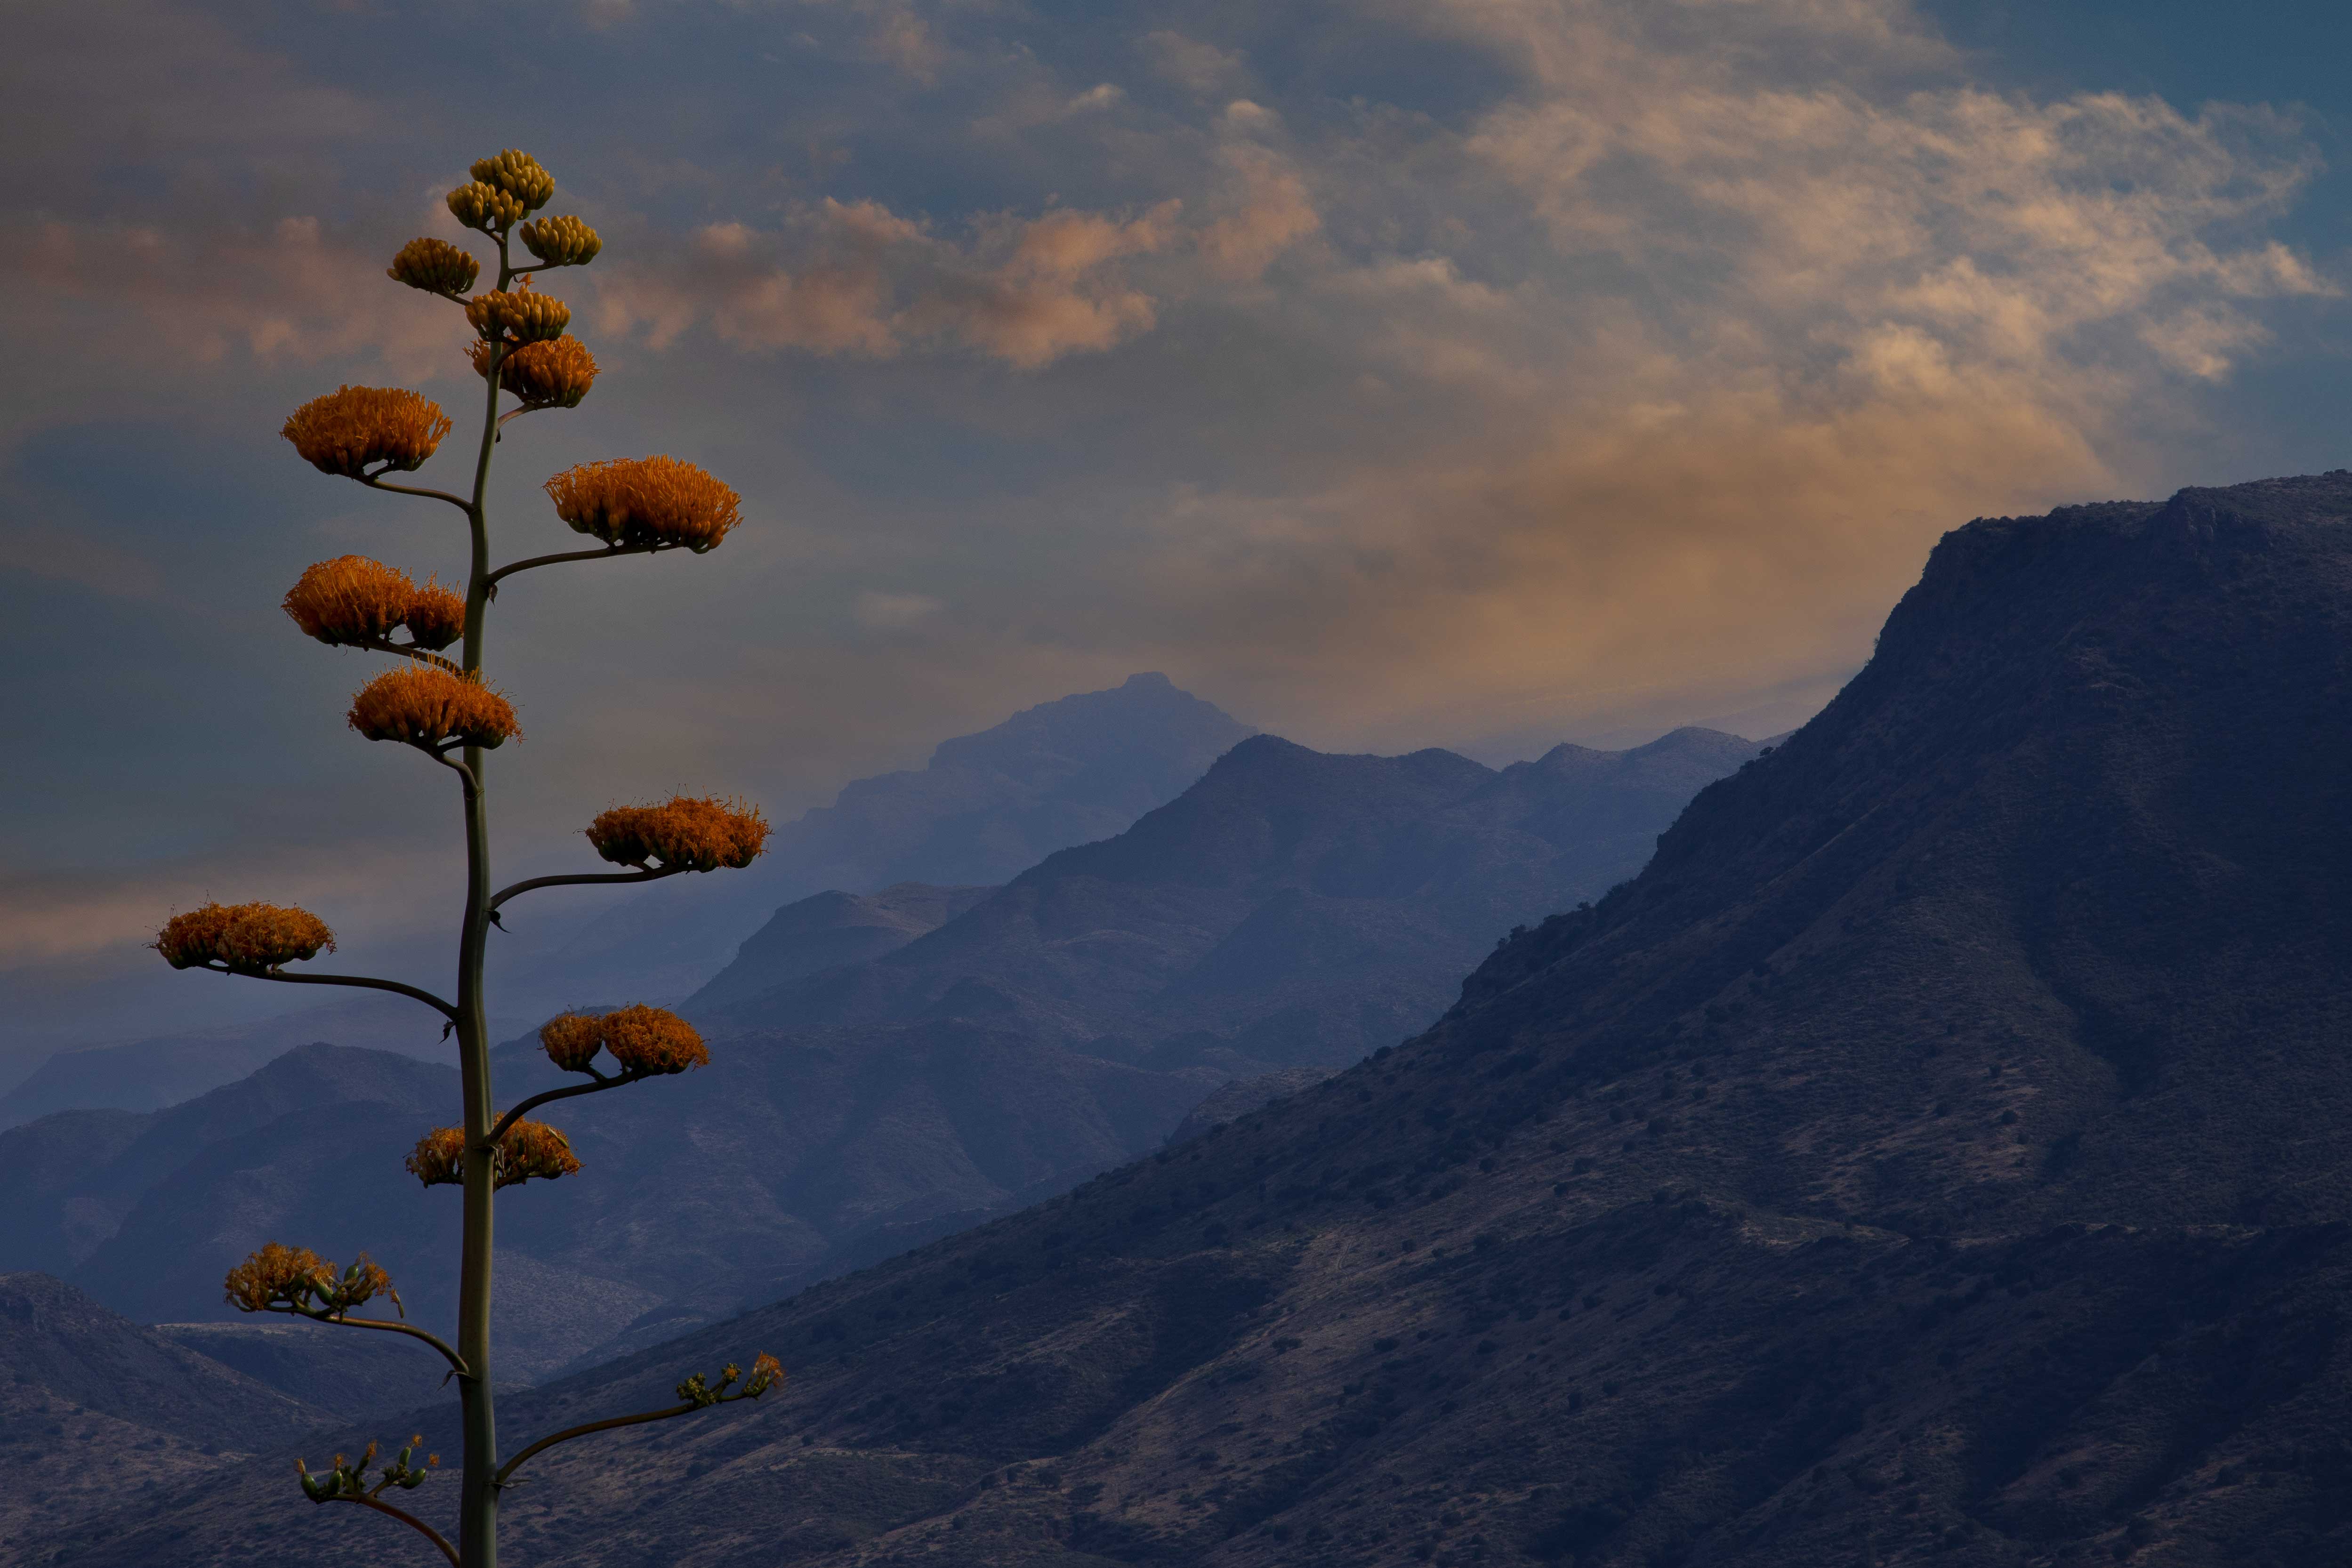 Century plant (Agave chrysantha) on Mt. Ord in the Mazatzal Mts., Arizona